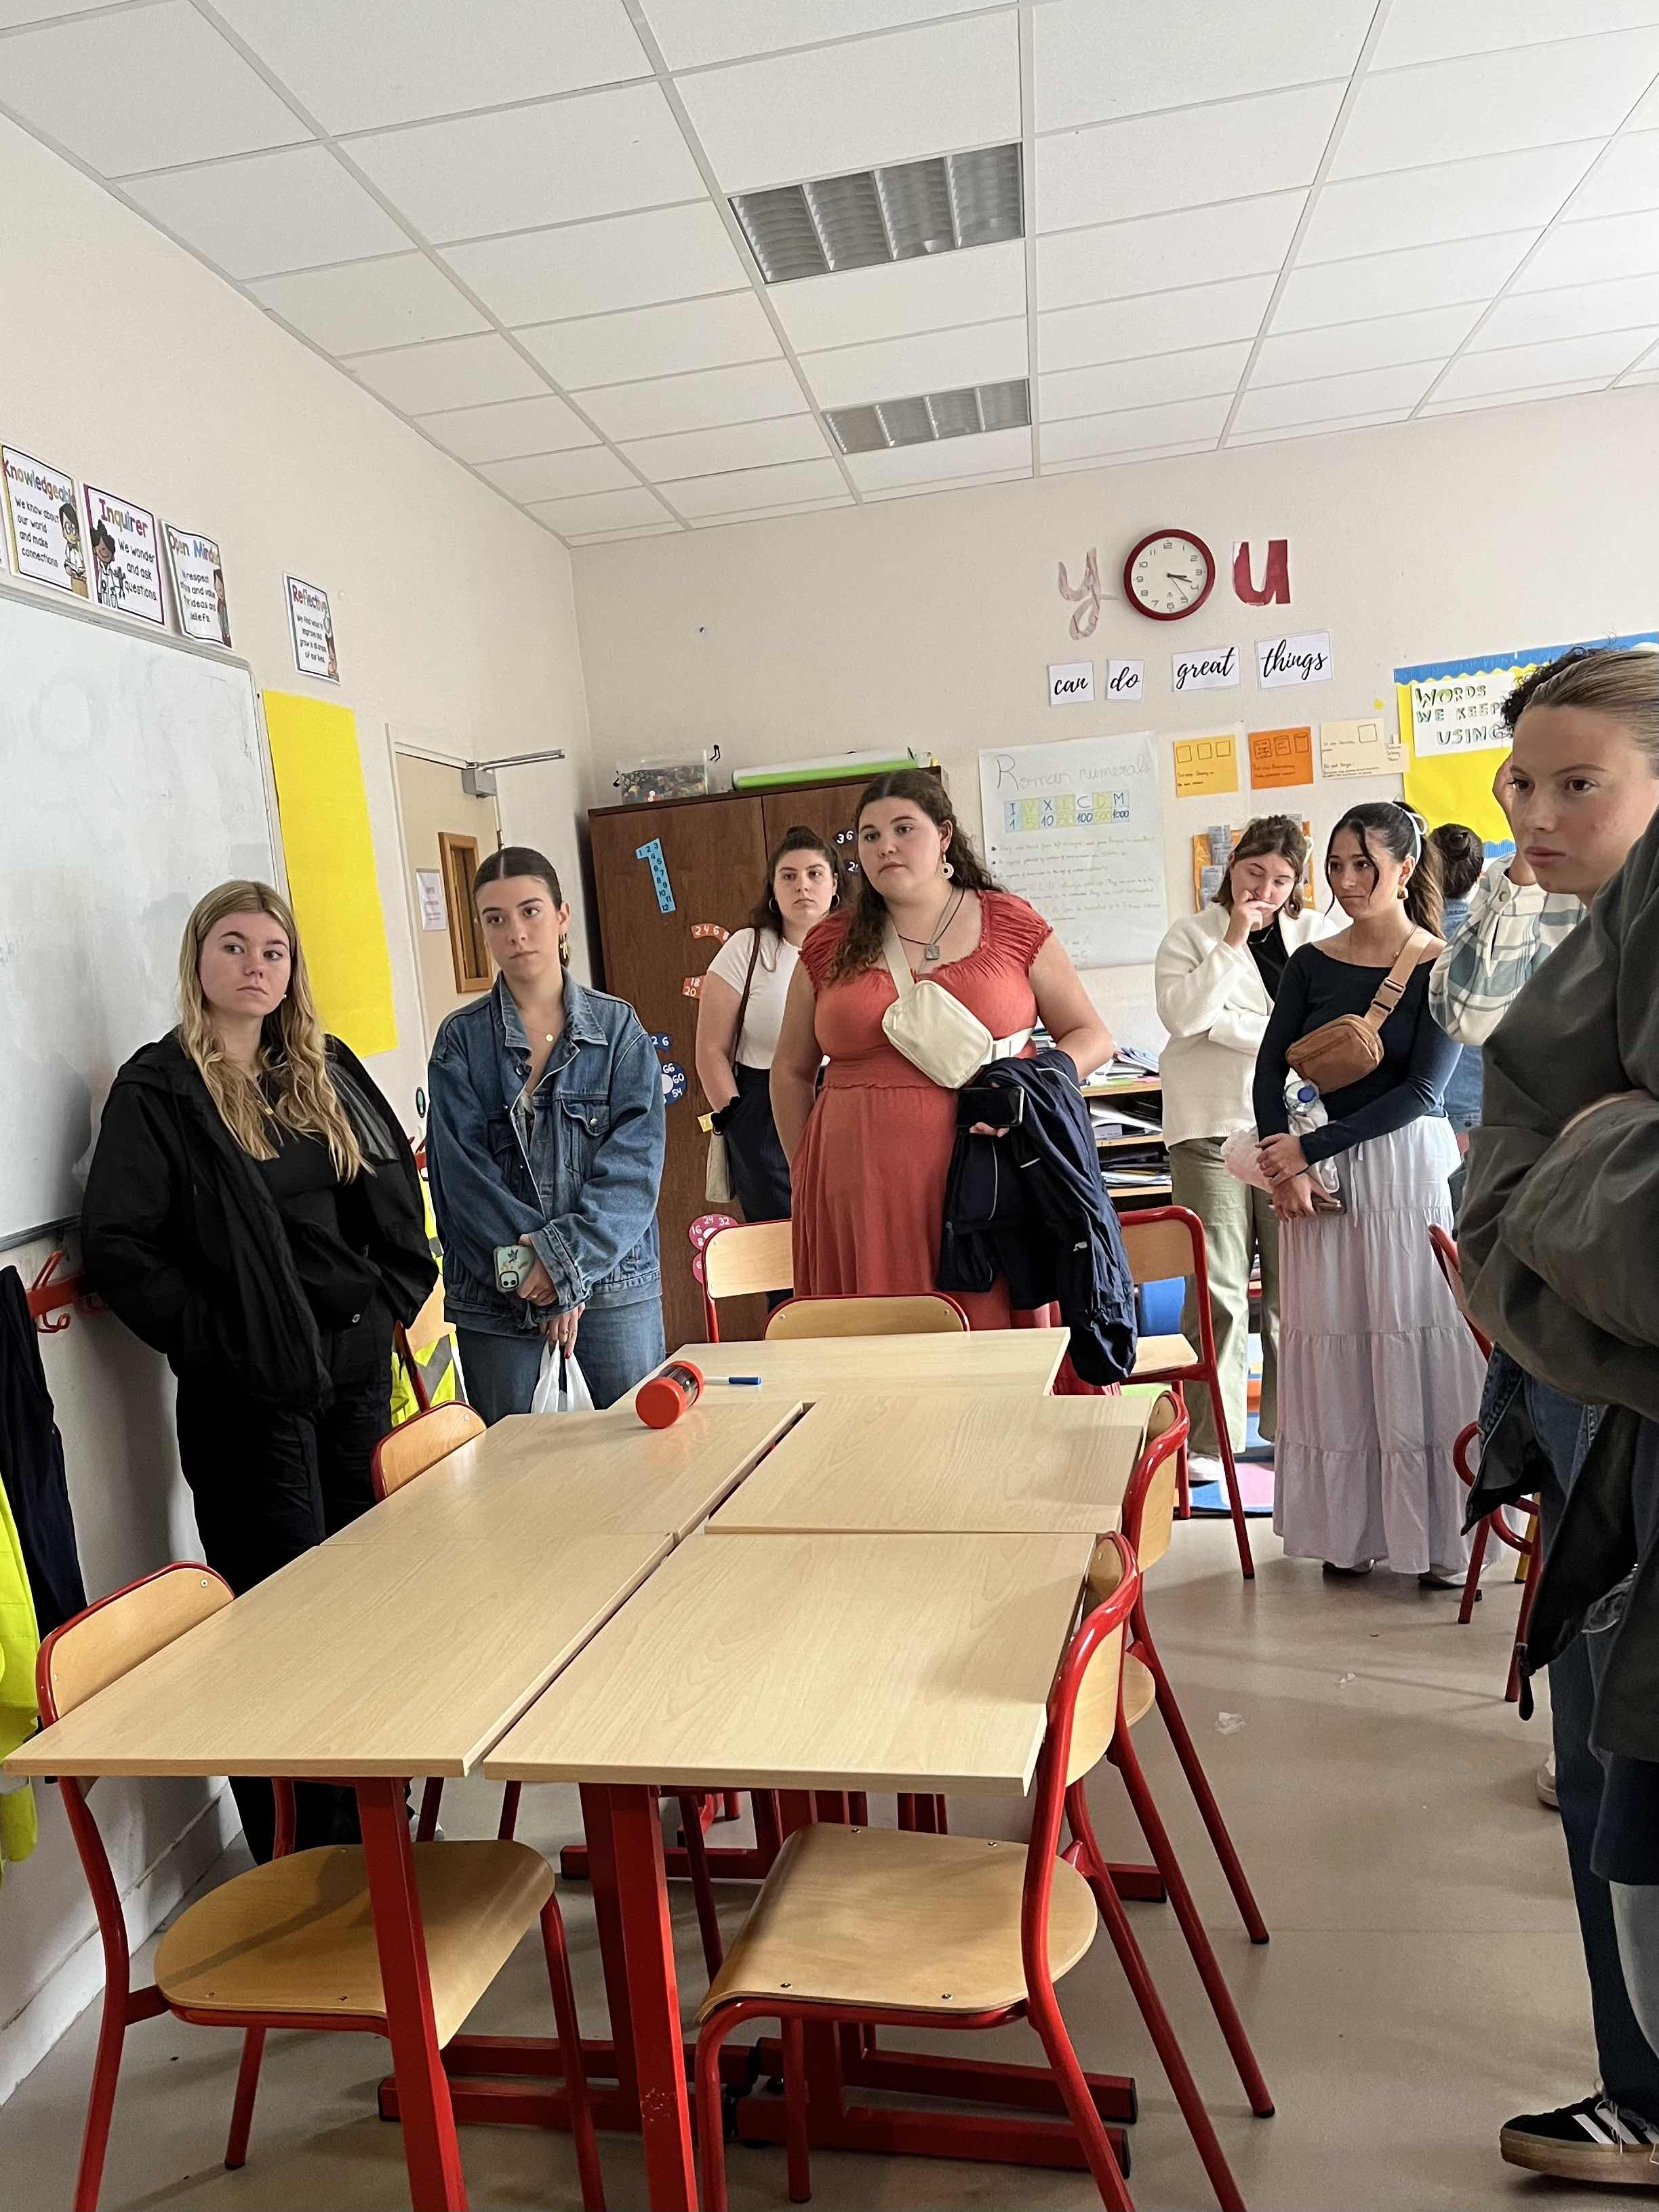 A school visit in Paris